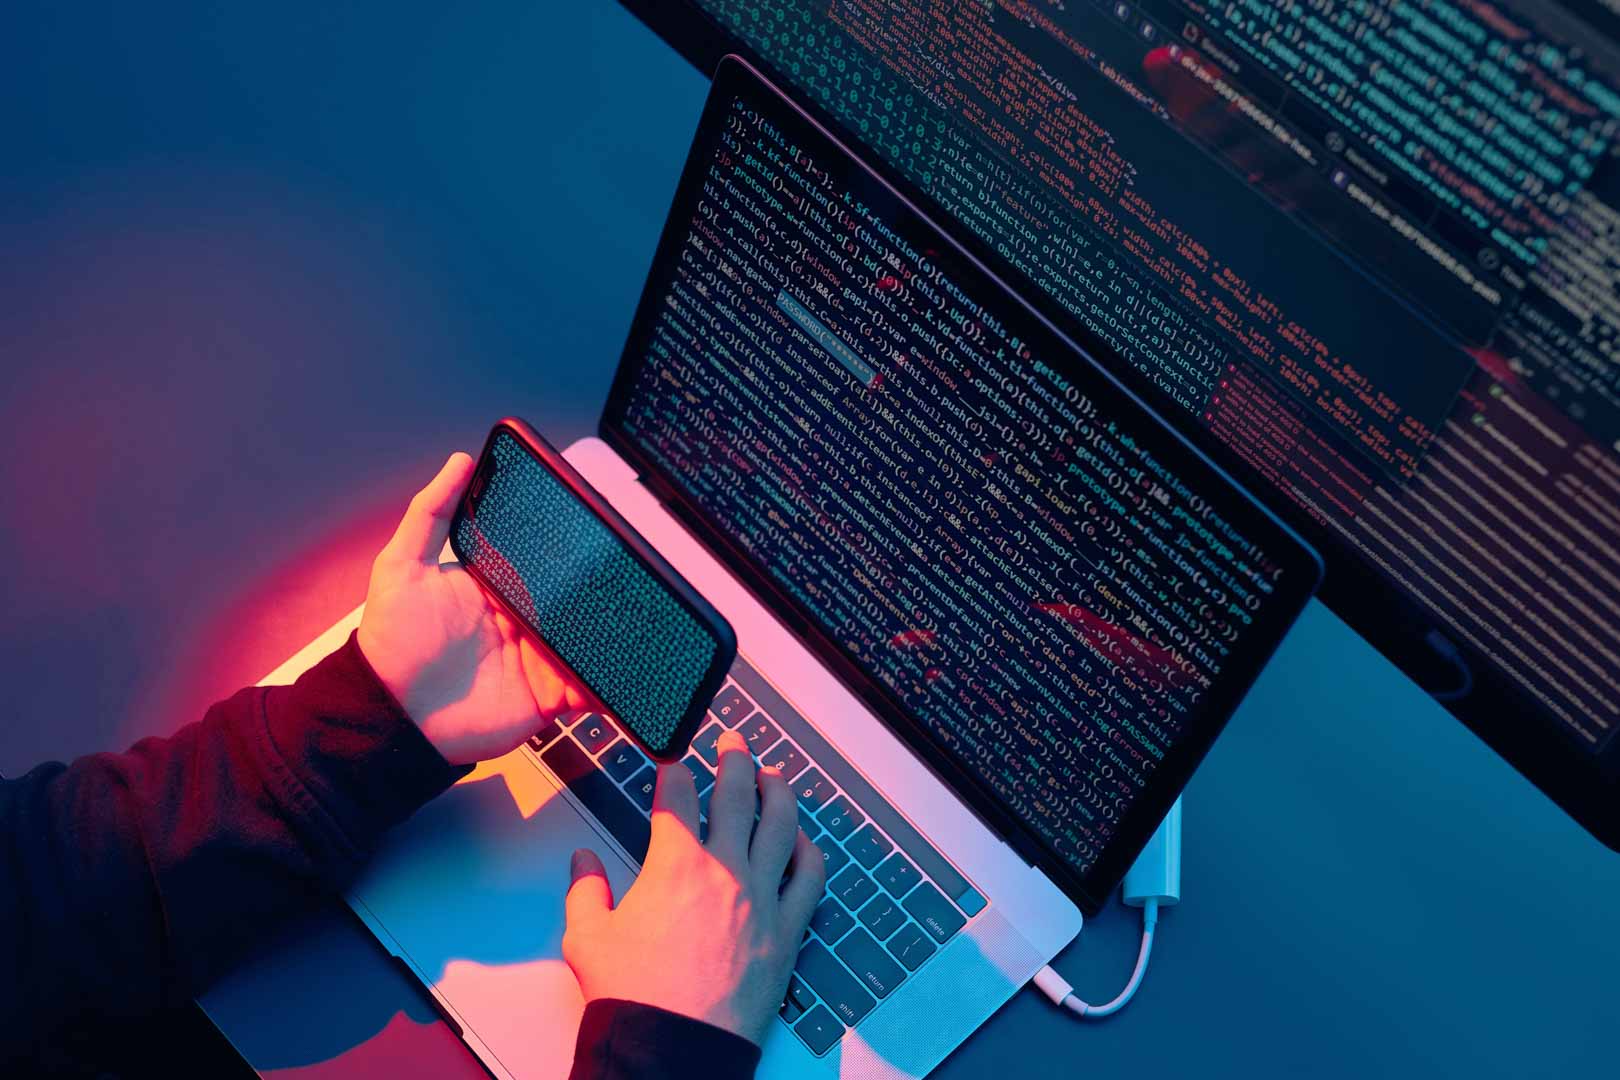 Programador-auditoria-phishing-fraude-hacker-pirata-informatico-robo-estafa